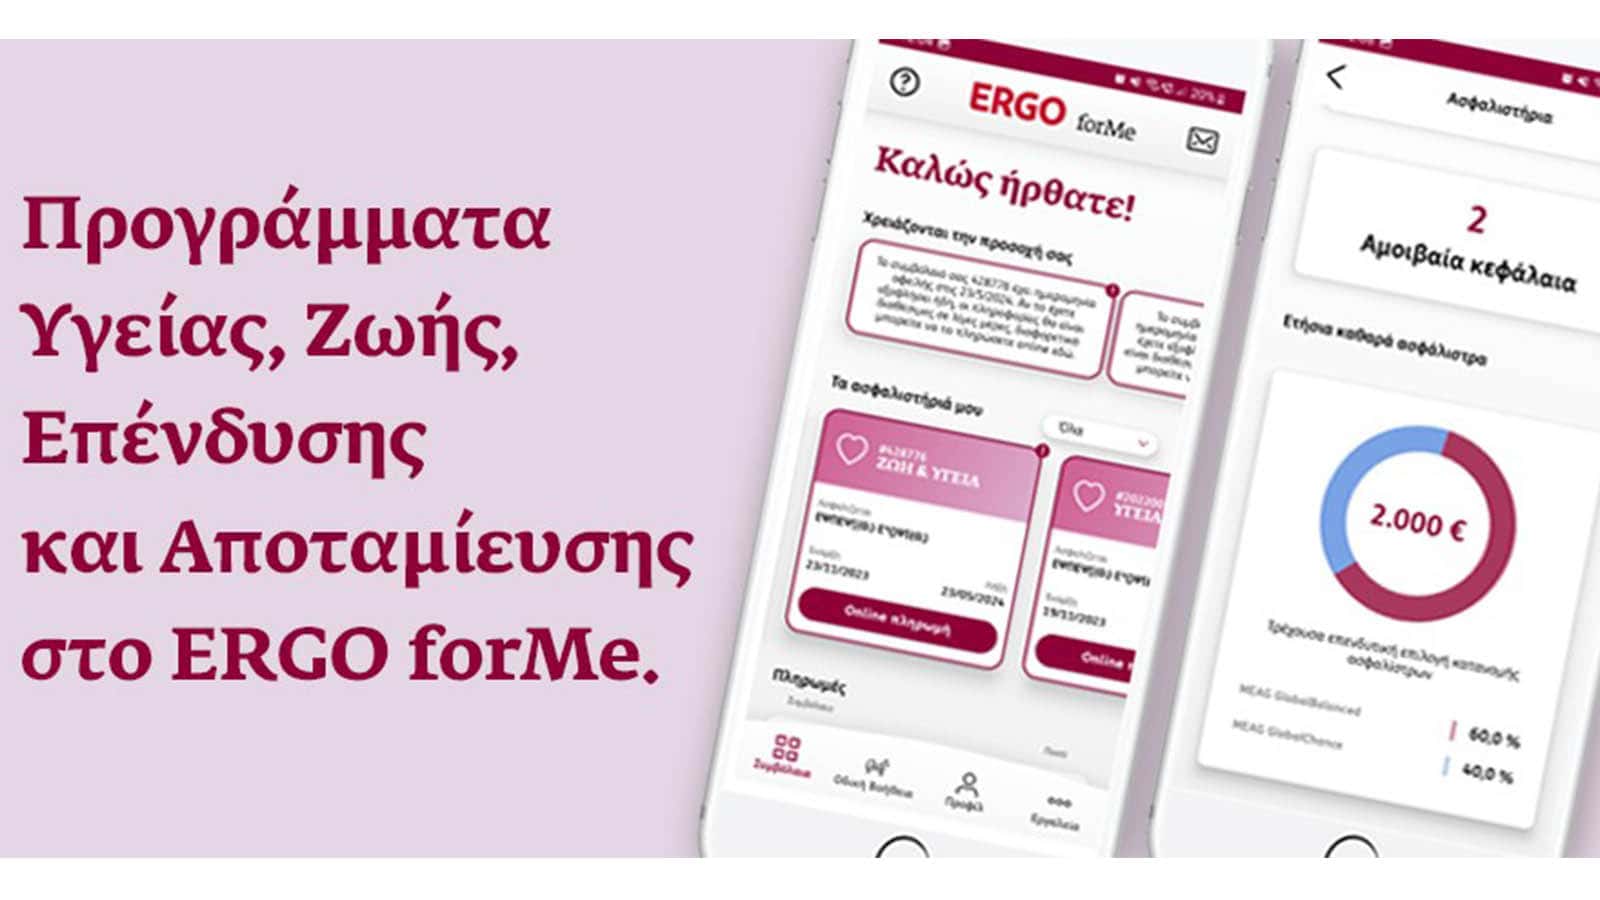 ERGO Ασφαλιστική: Εμπλουτίζει την εφαρμογή πελατών ERGO forMe με νέα προγράμματα και υπηρεσίες